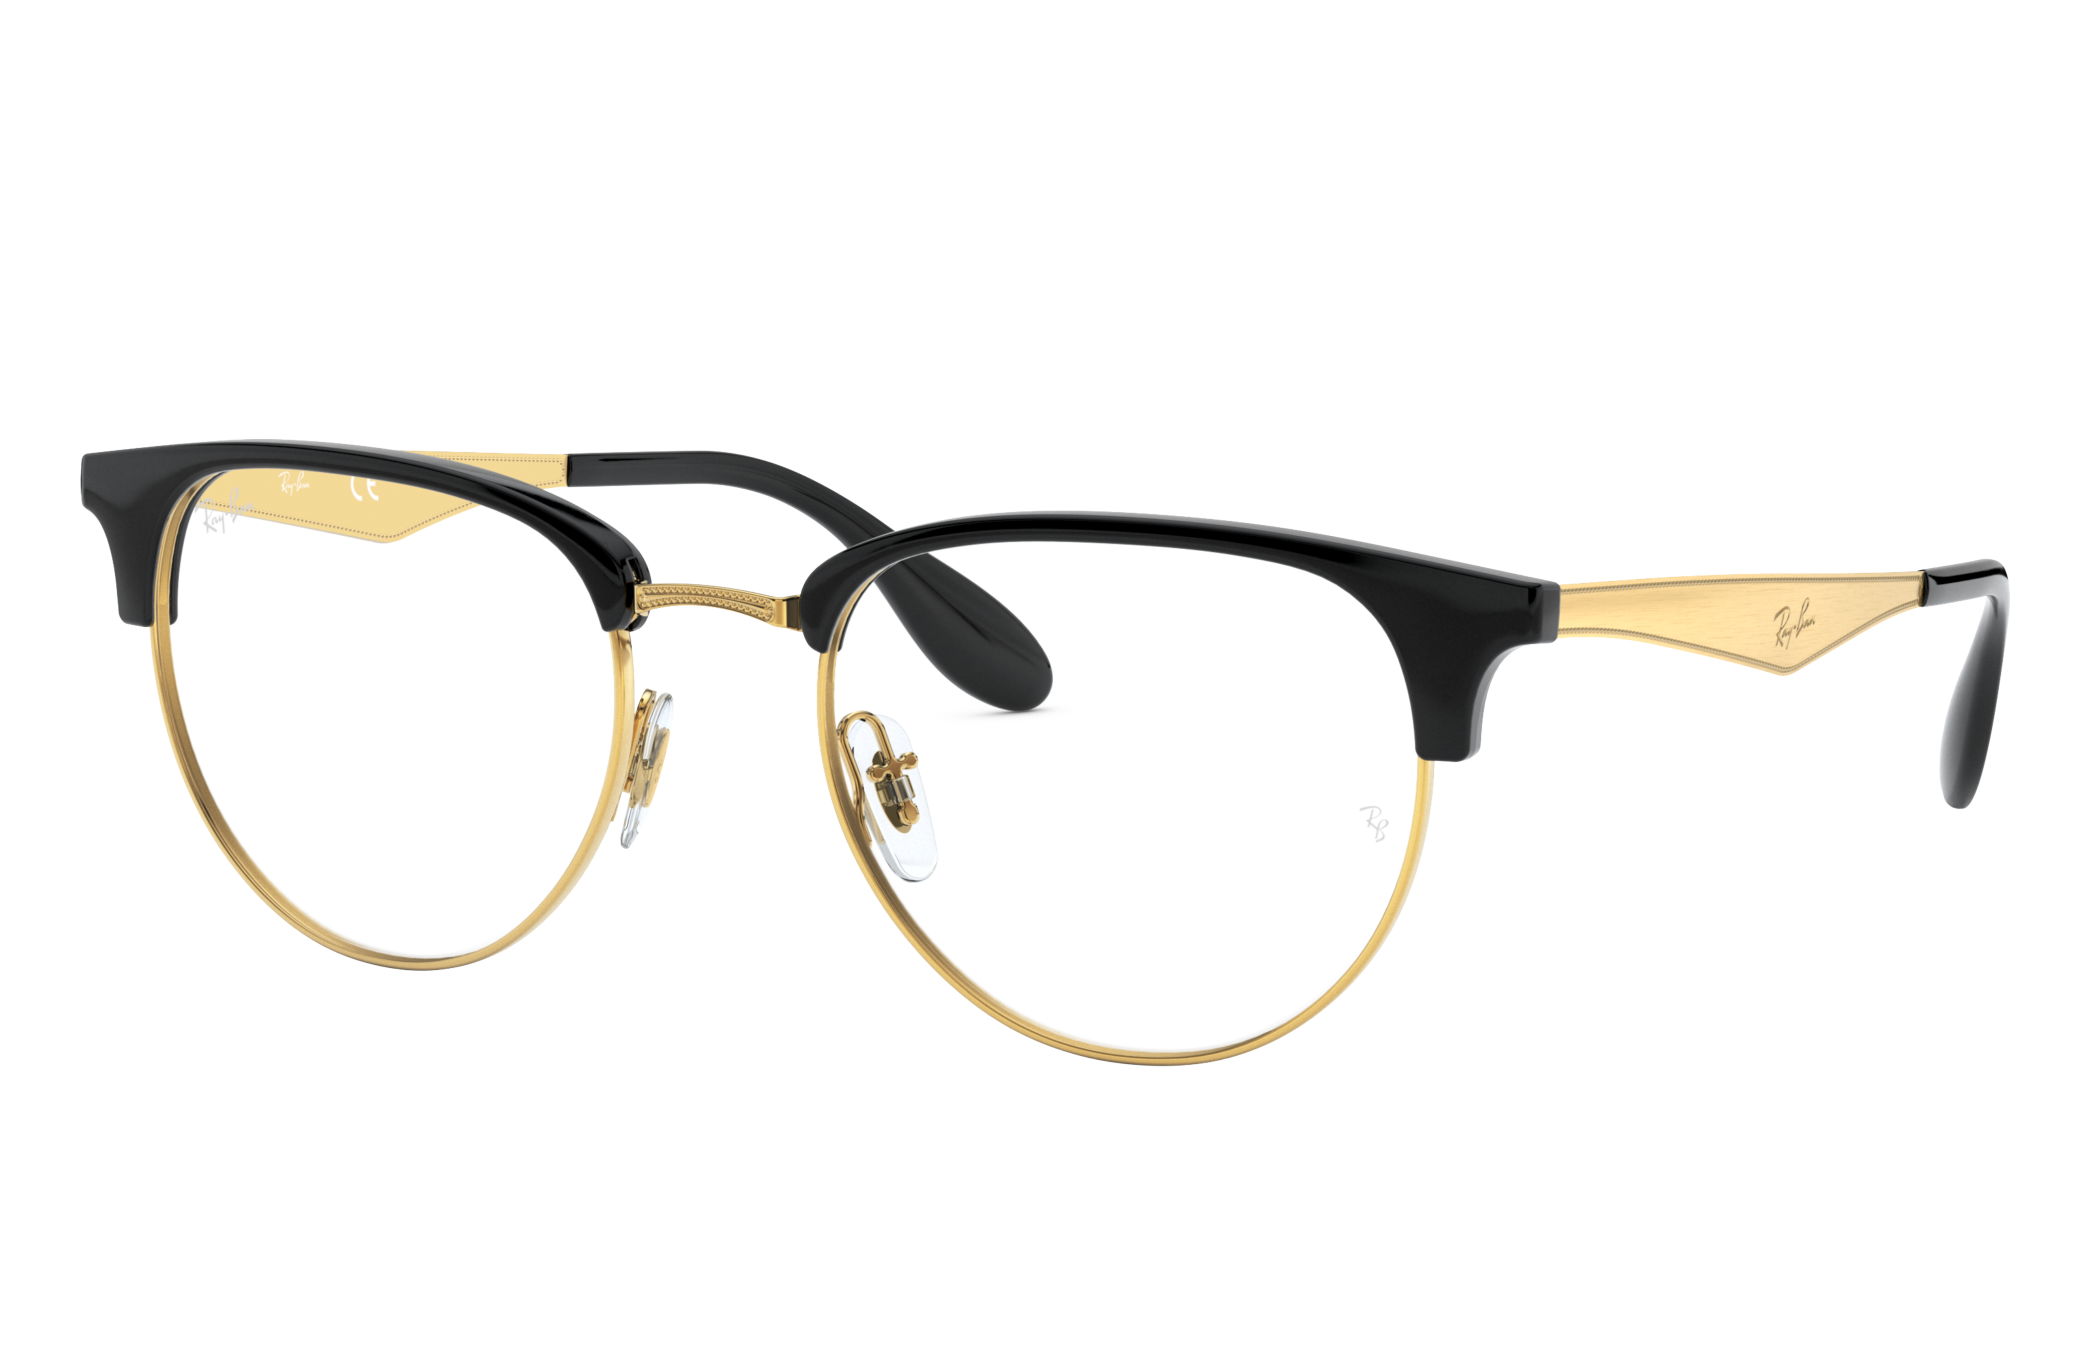 Rb6396 Optics Eyeglasses with Black On Gold Frame | Ray-Ban®